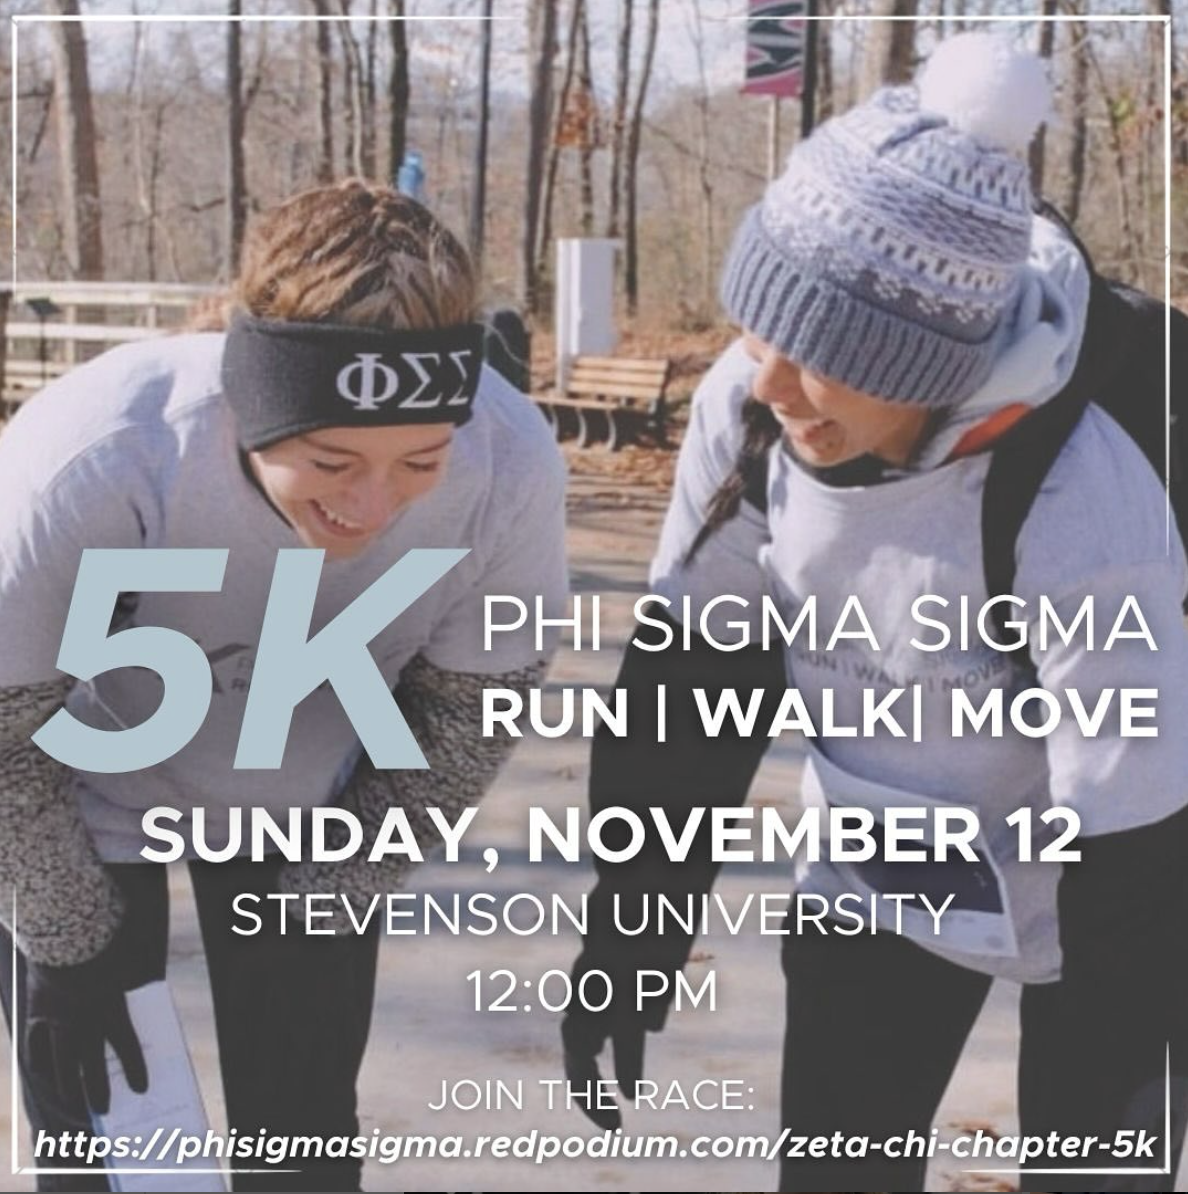 Phi Sigma Sigma to host 5K at Stevenson